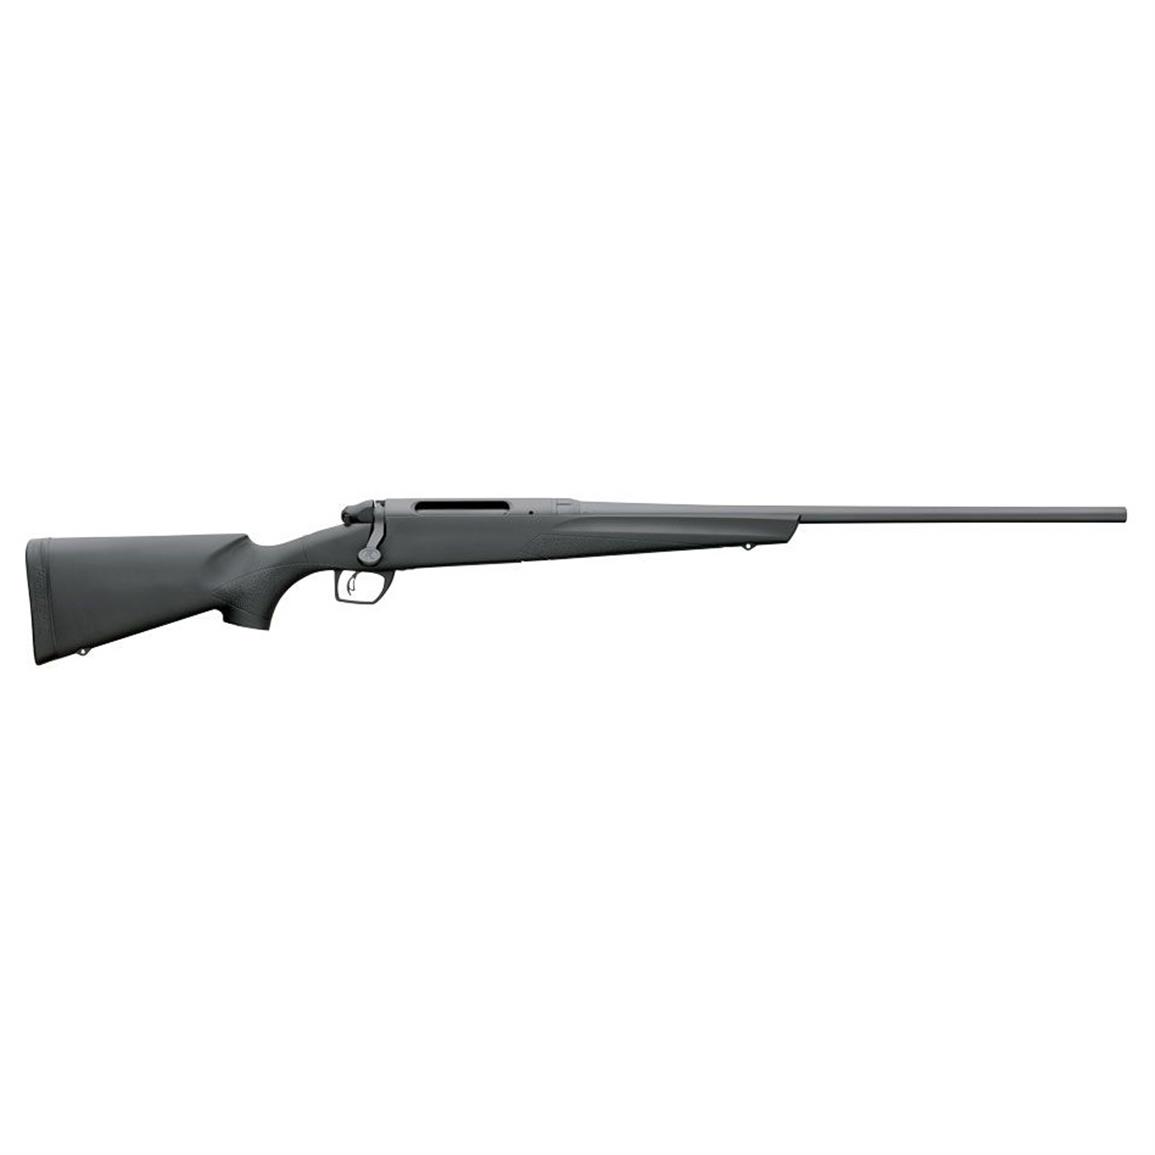 Remington 783, Bolt Action, .243 Winchester, 20" Barrel, 3-9x40 Scope, 4 1 Rounds